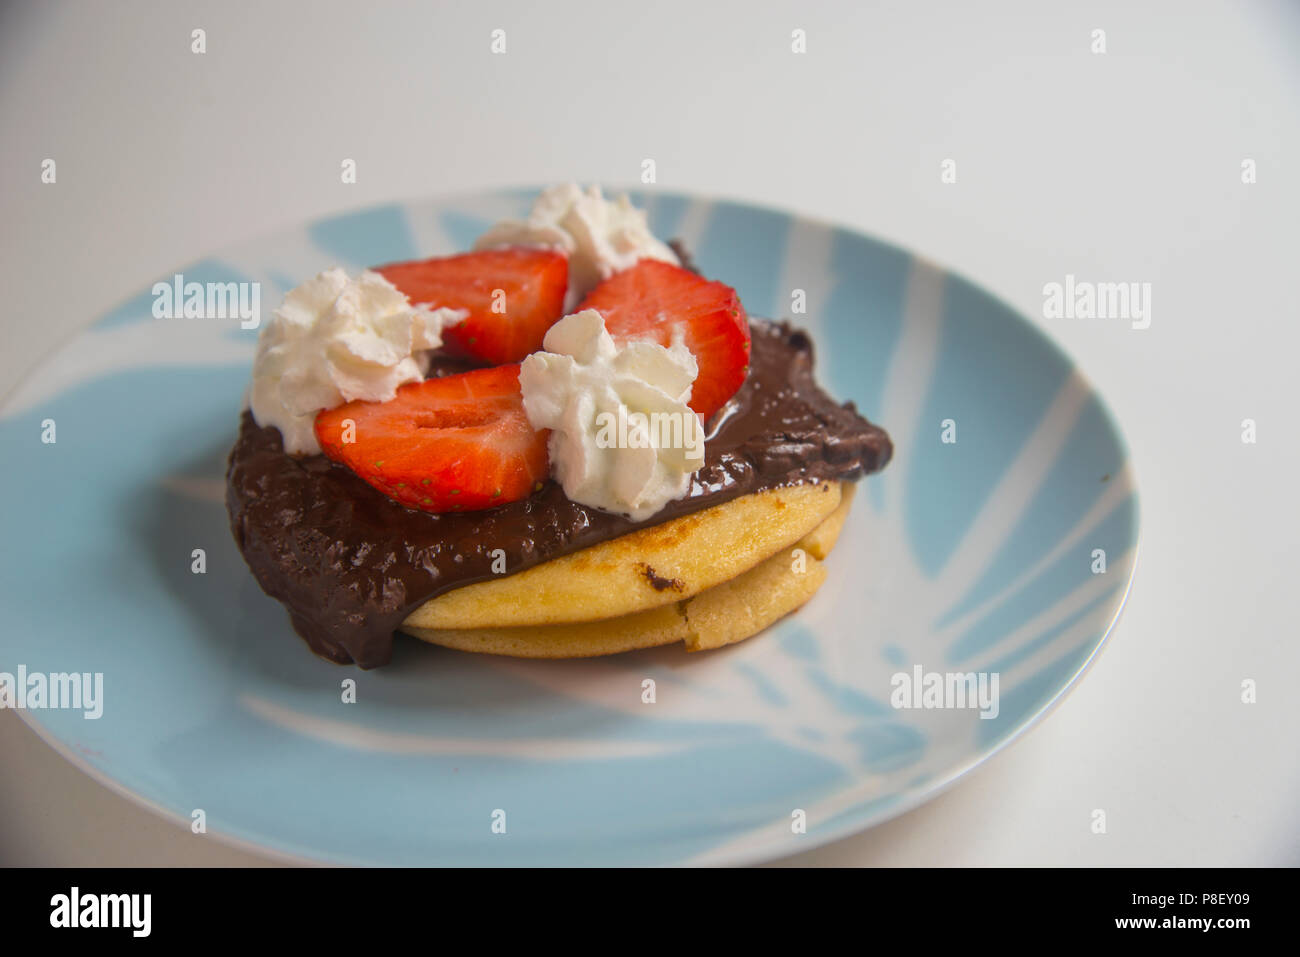 Pancakes with chocolate, strawberries and cream. Stock Photo